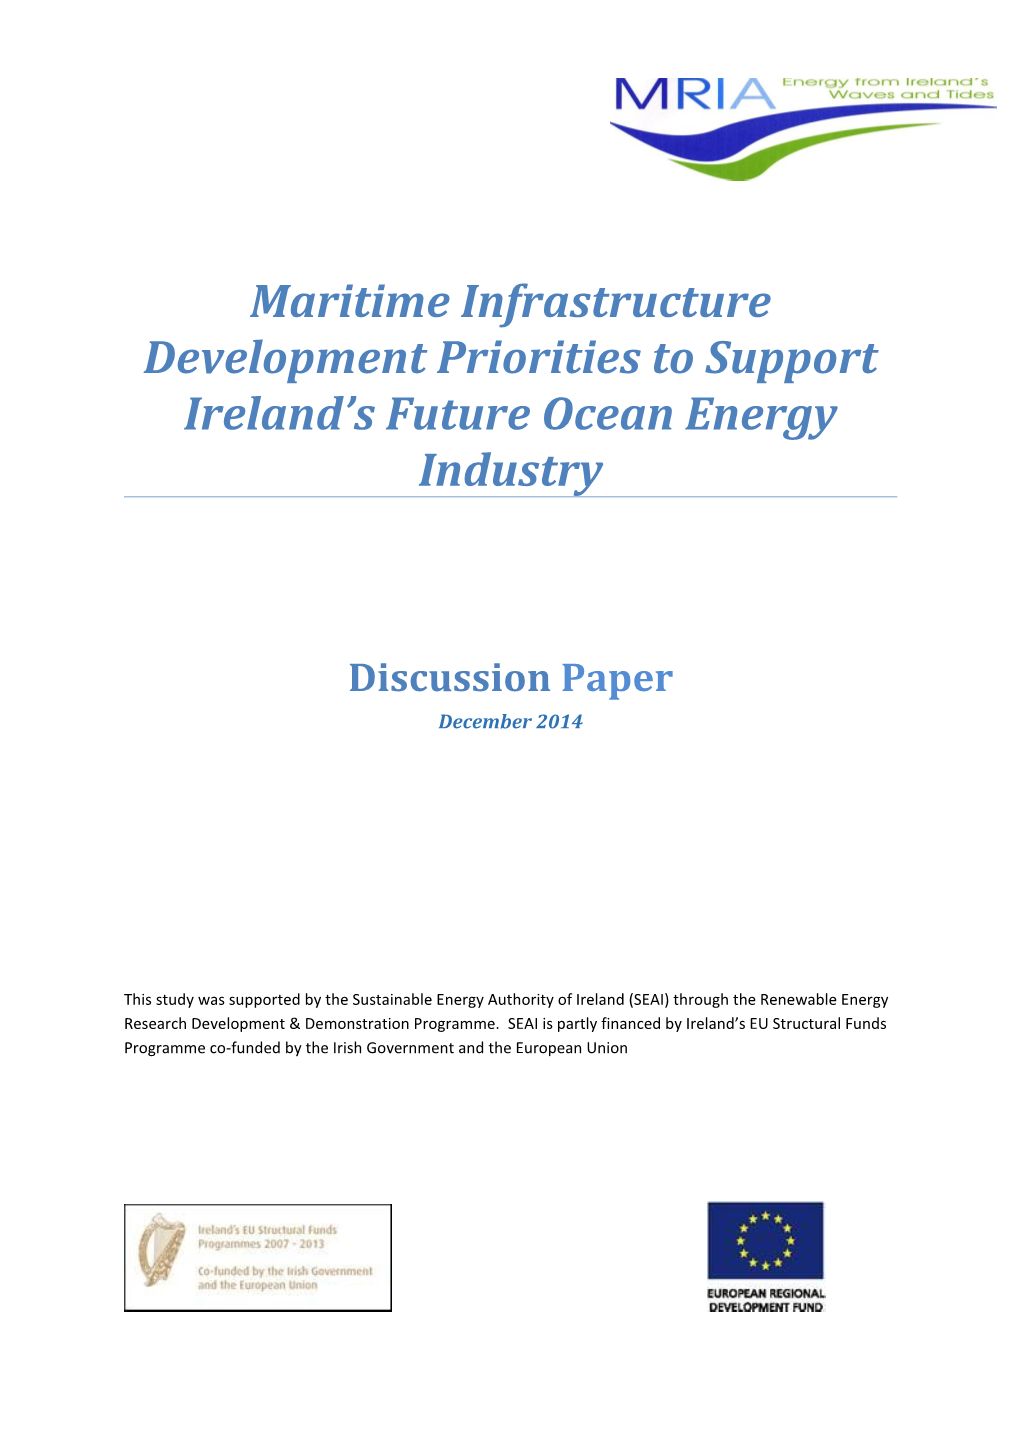 Maritime Infrastructure Development Priorities to Support Ireland's Future